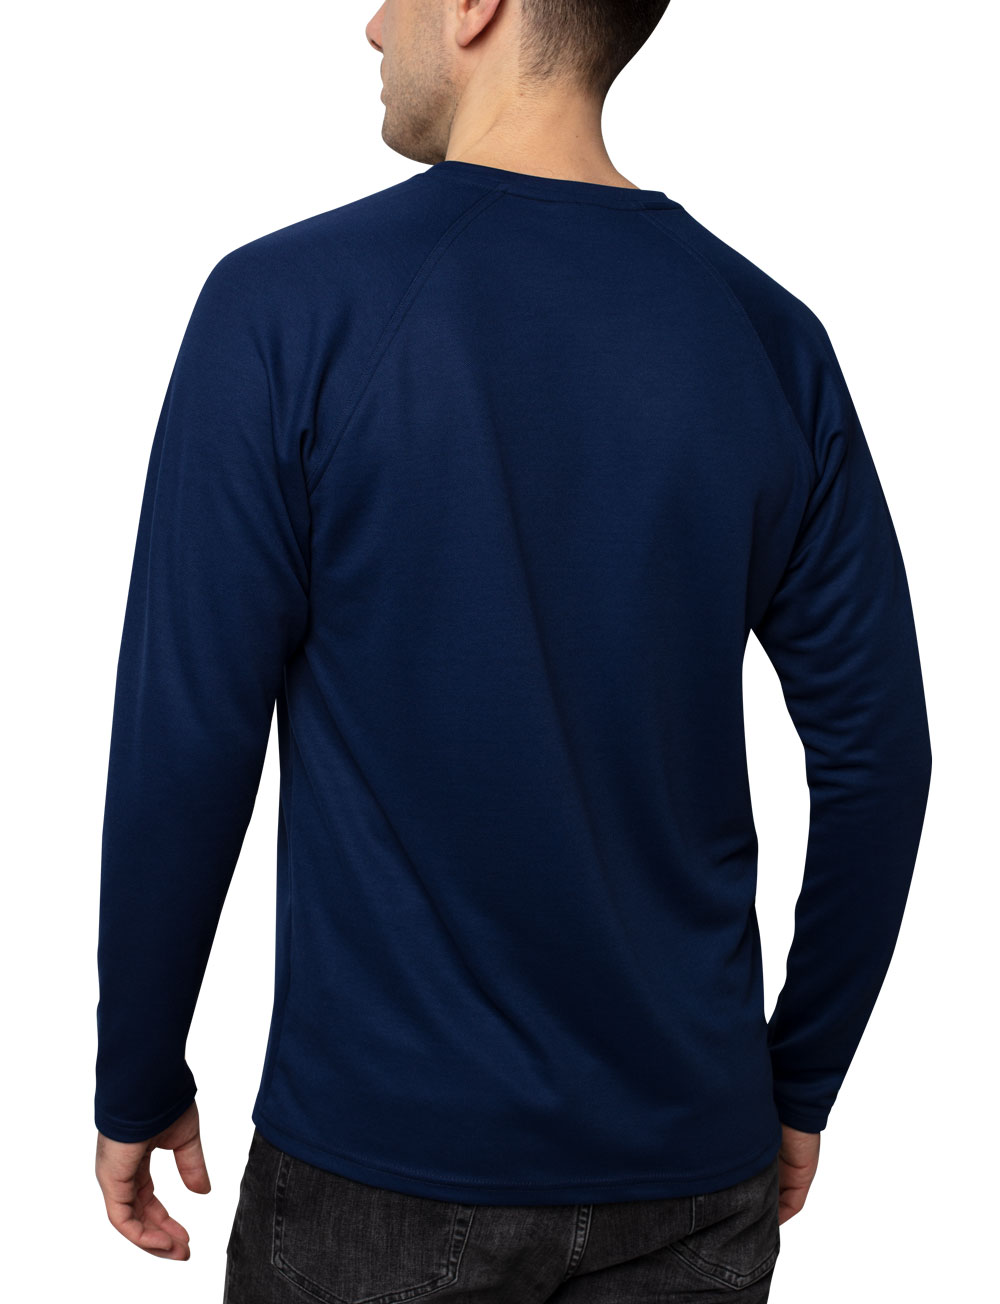 UV langarm Shirt für Herren Outdoor V-Ausschnitt navy back